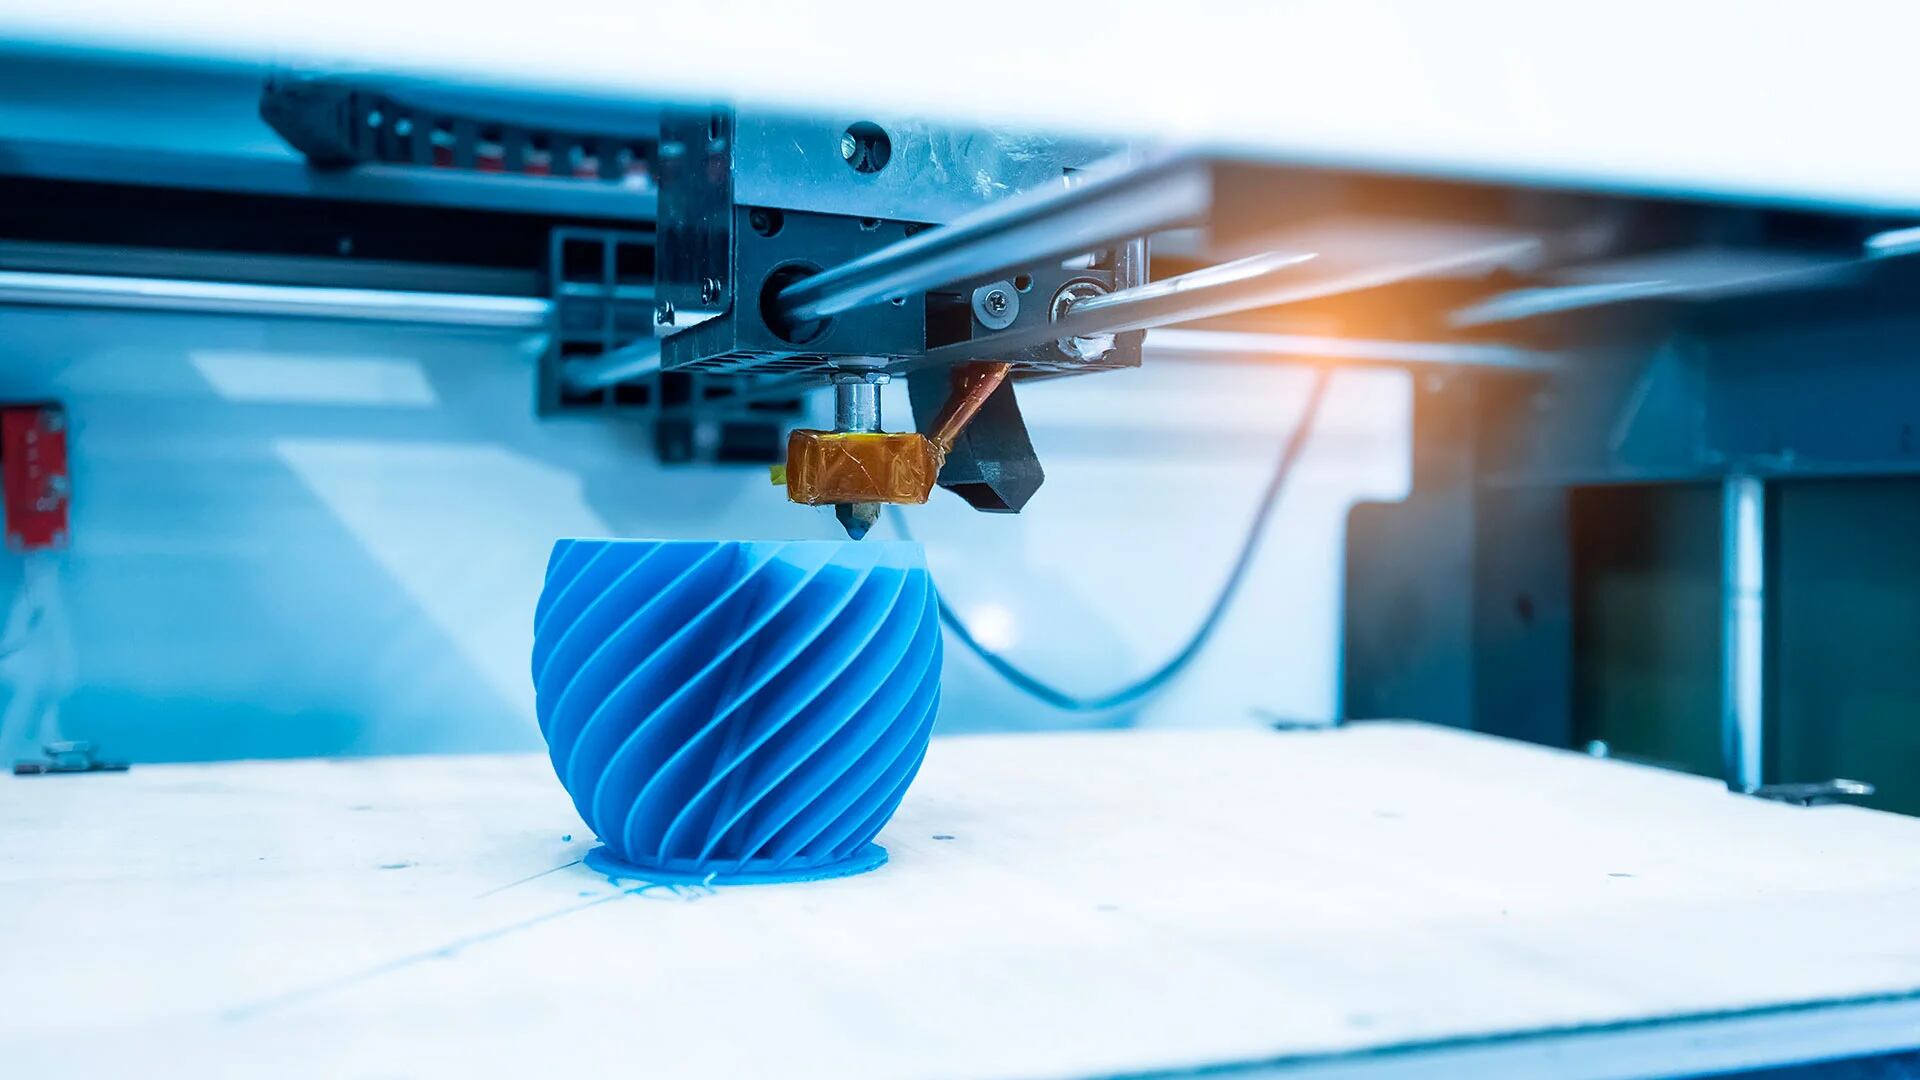 El avance de la impresora 3D, el electrodoméstico del futuro - Infobae